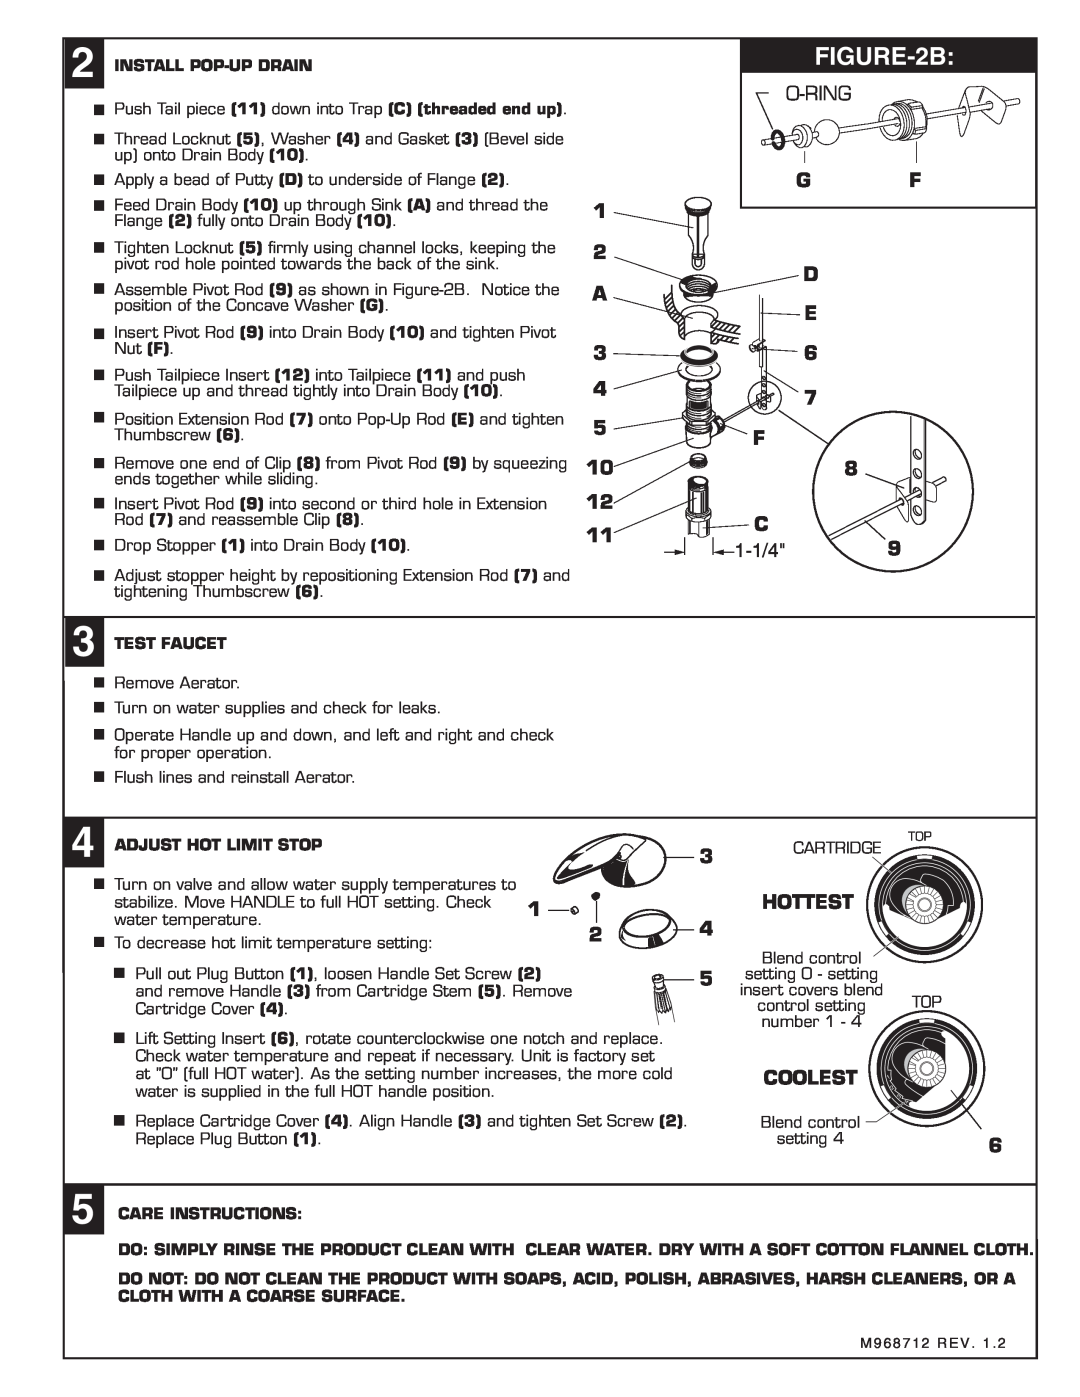 American Standard 2088 installation instructions B, Ring, 1-1/4, Hottest 